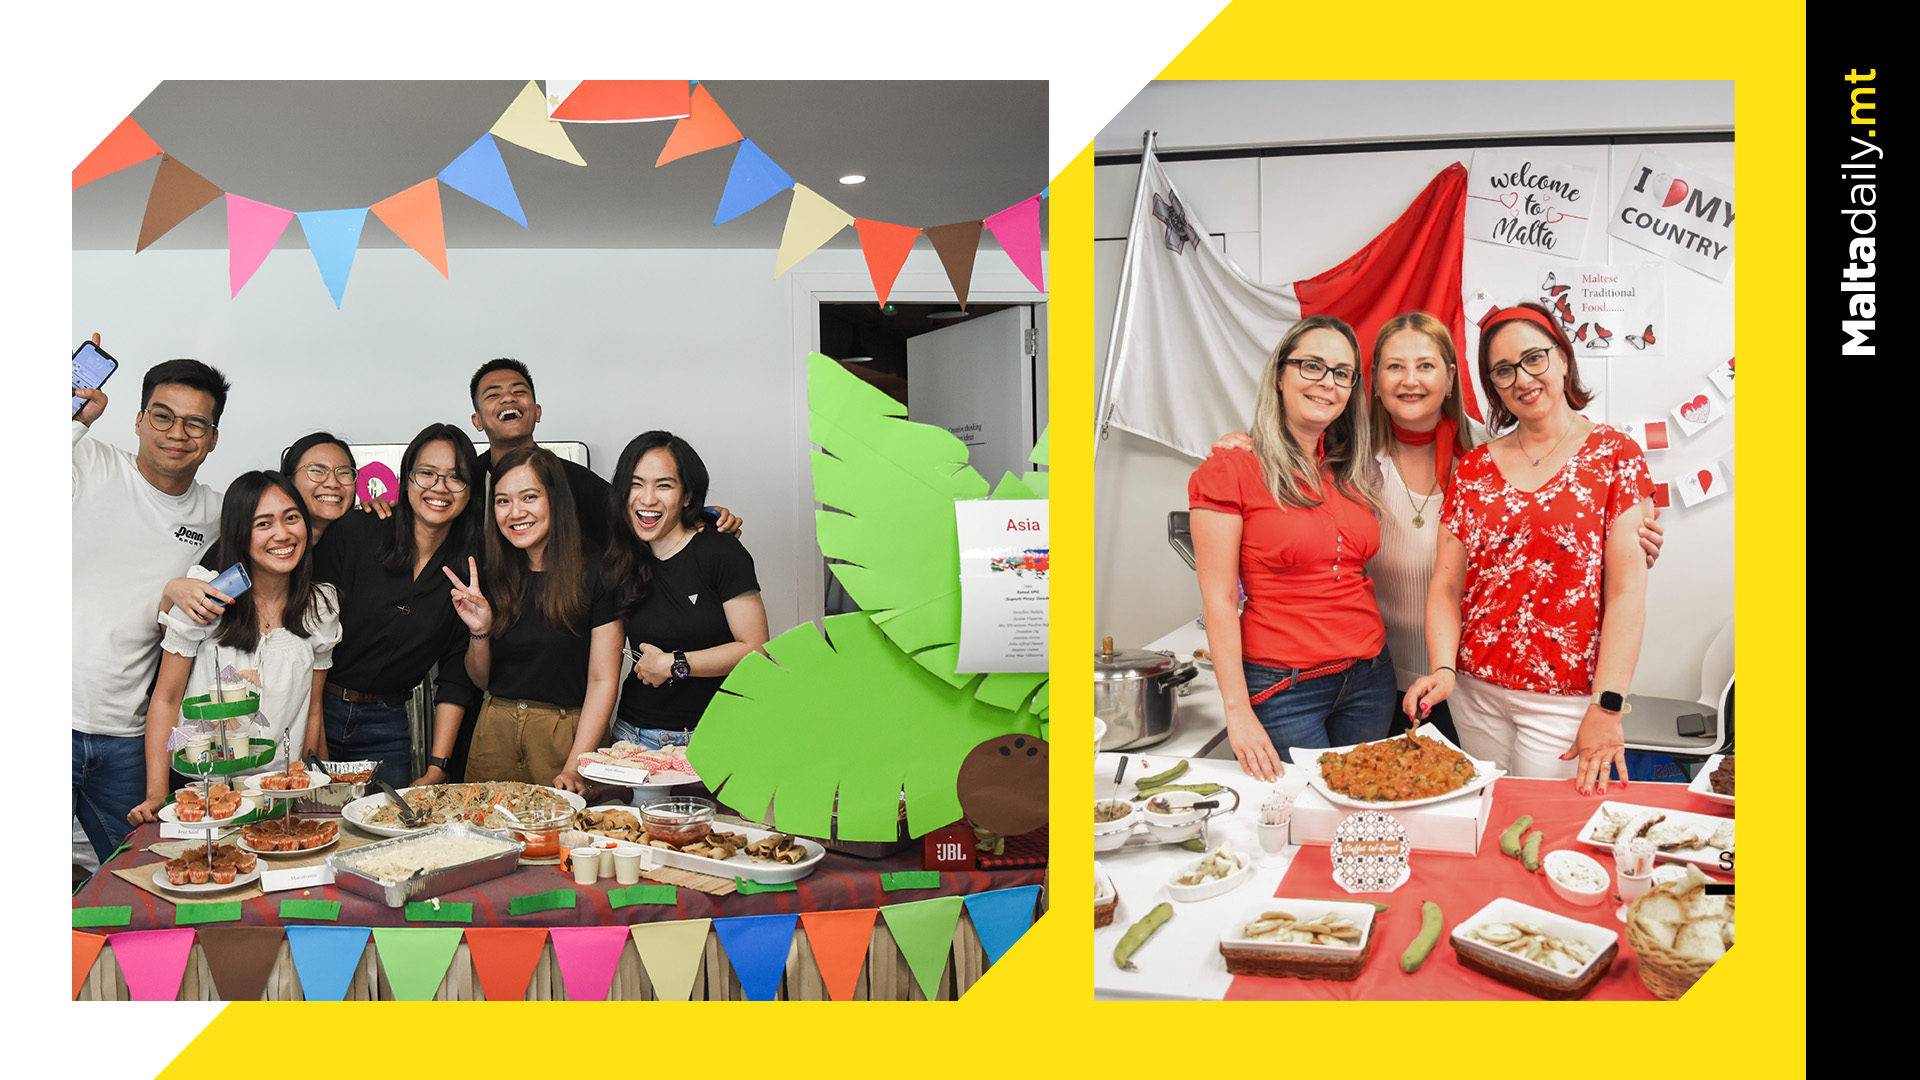 PwC Malta organises international food festivals to celebrate workplace diversity